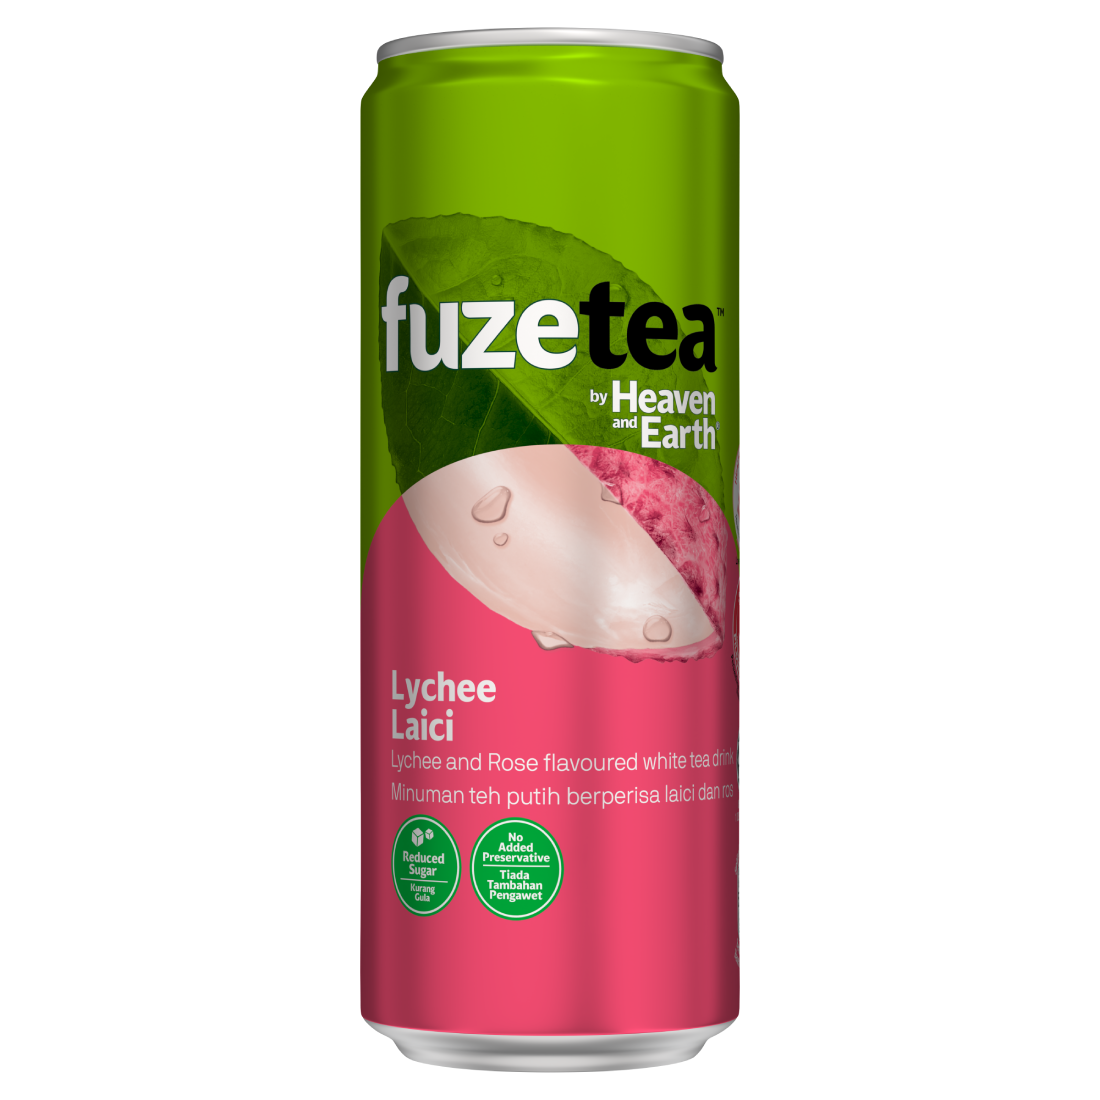 Fuze Tea Lychee Tea can